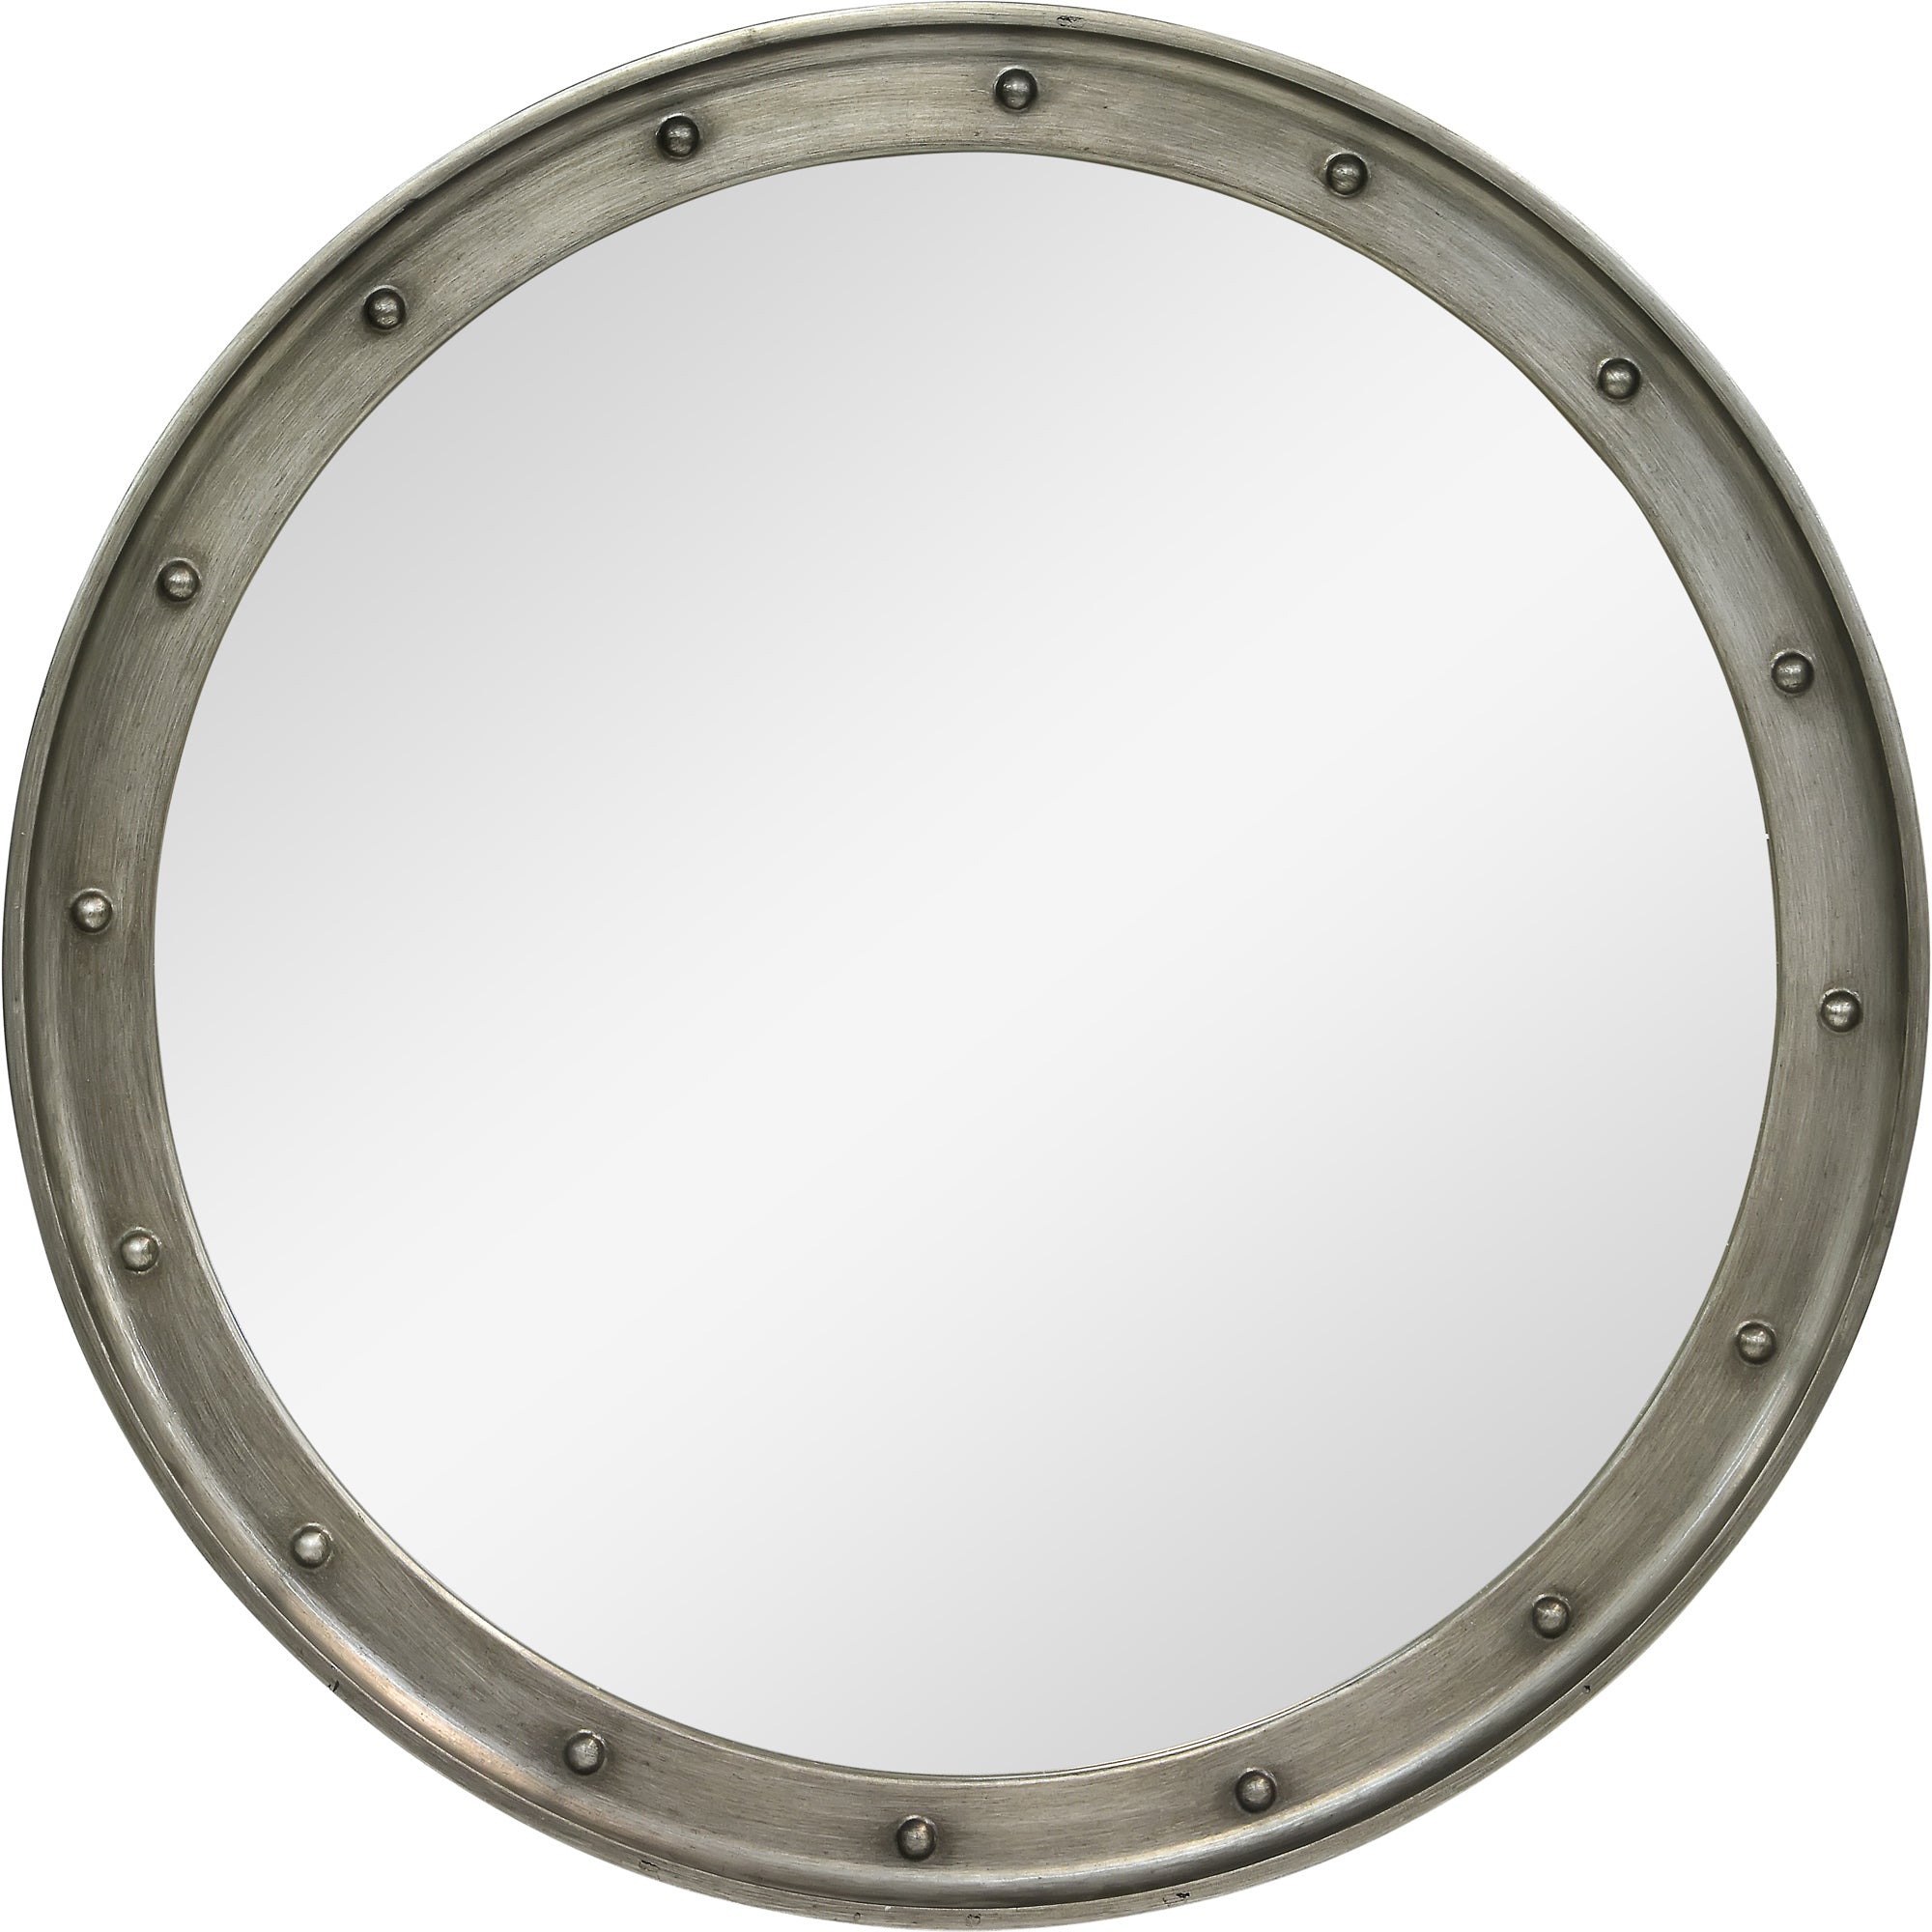 MELVA round wall mirror